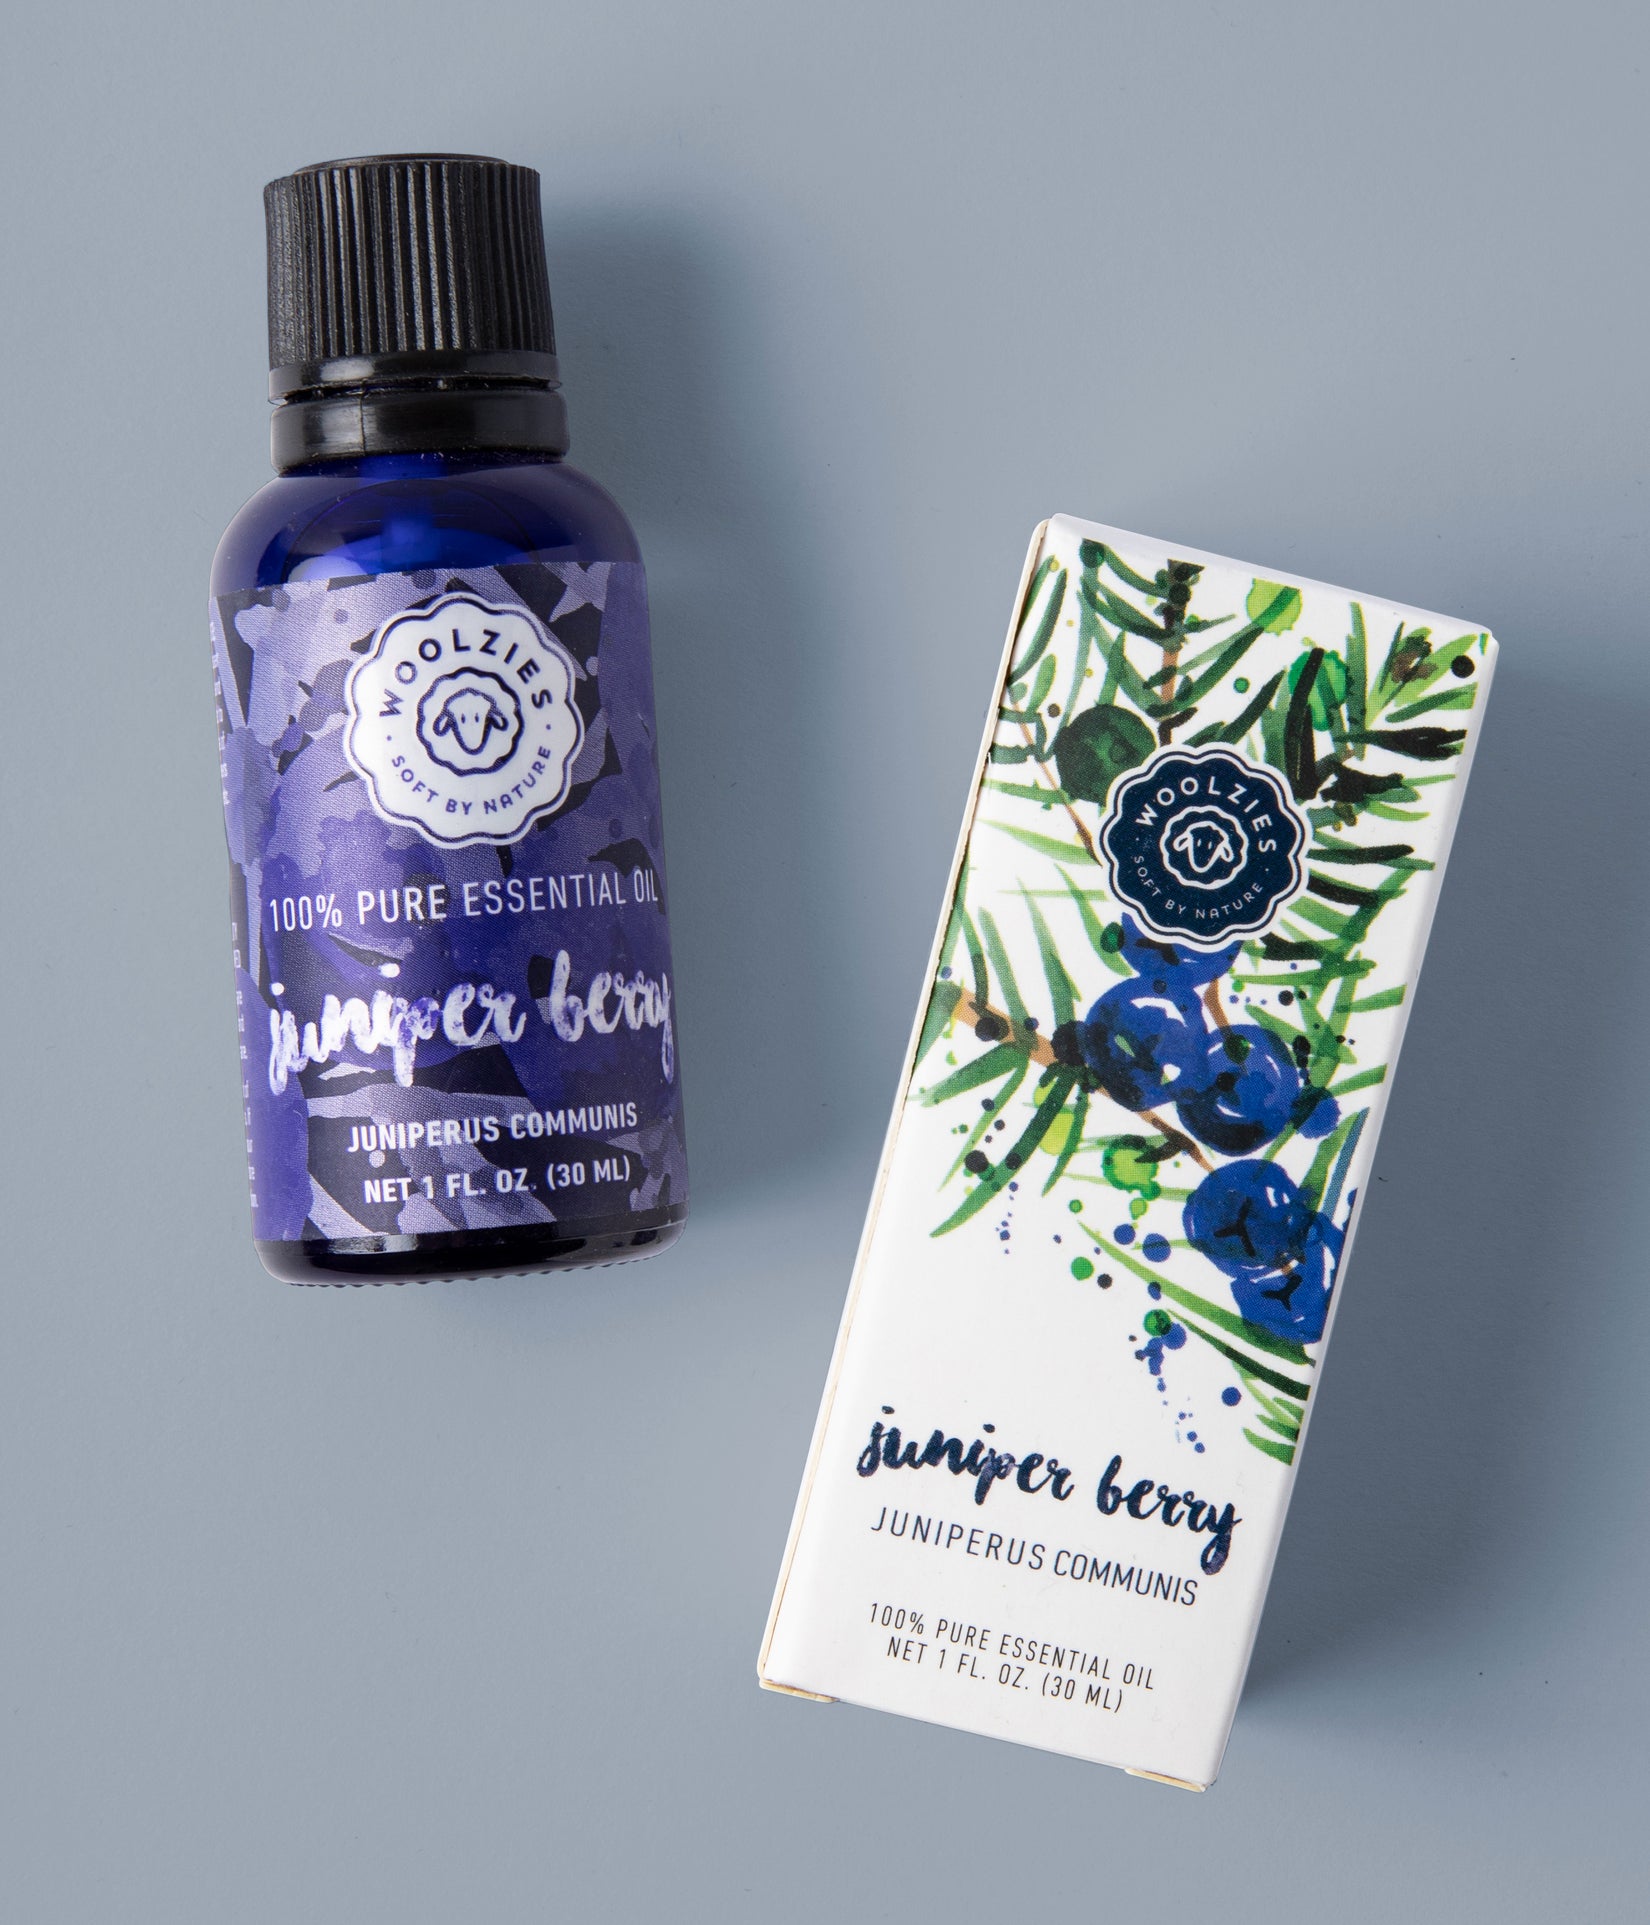 Spring Valley 100% Pure Tea Tree Oil for Skin Health, Liquid